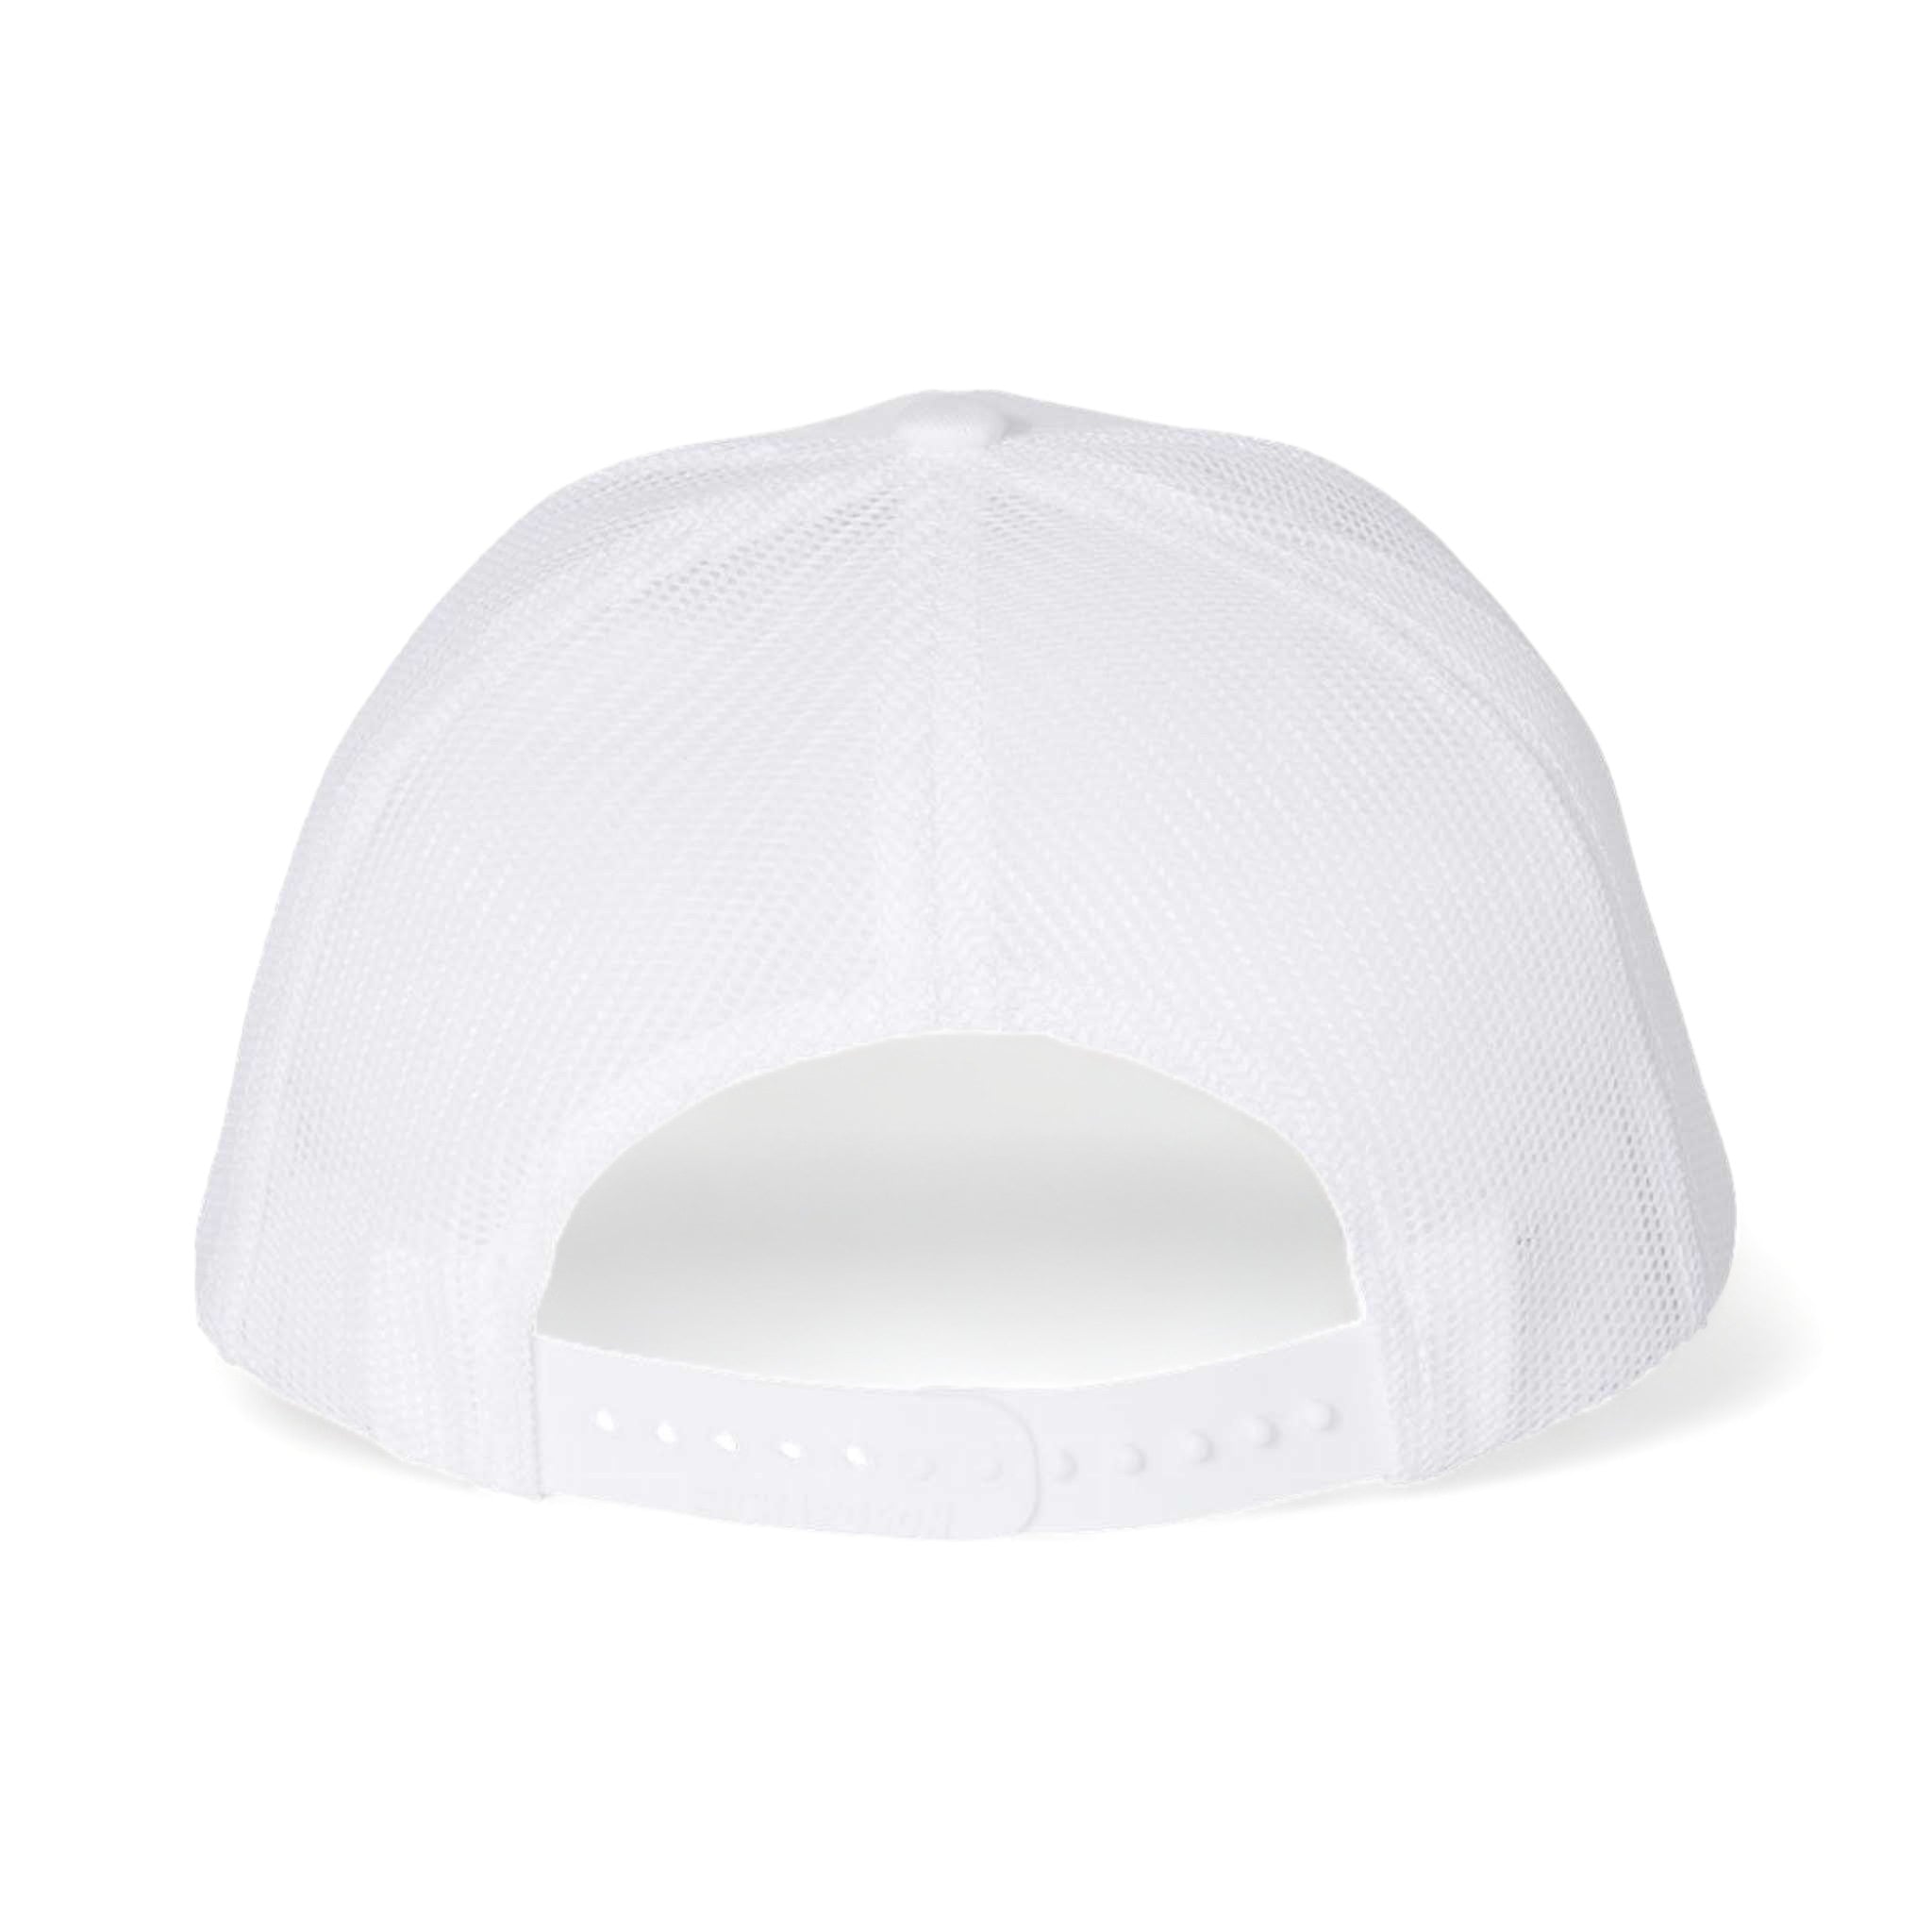 Back view of Richardson 112 custom hat in white